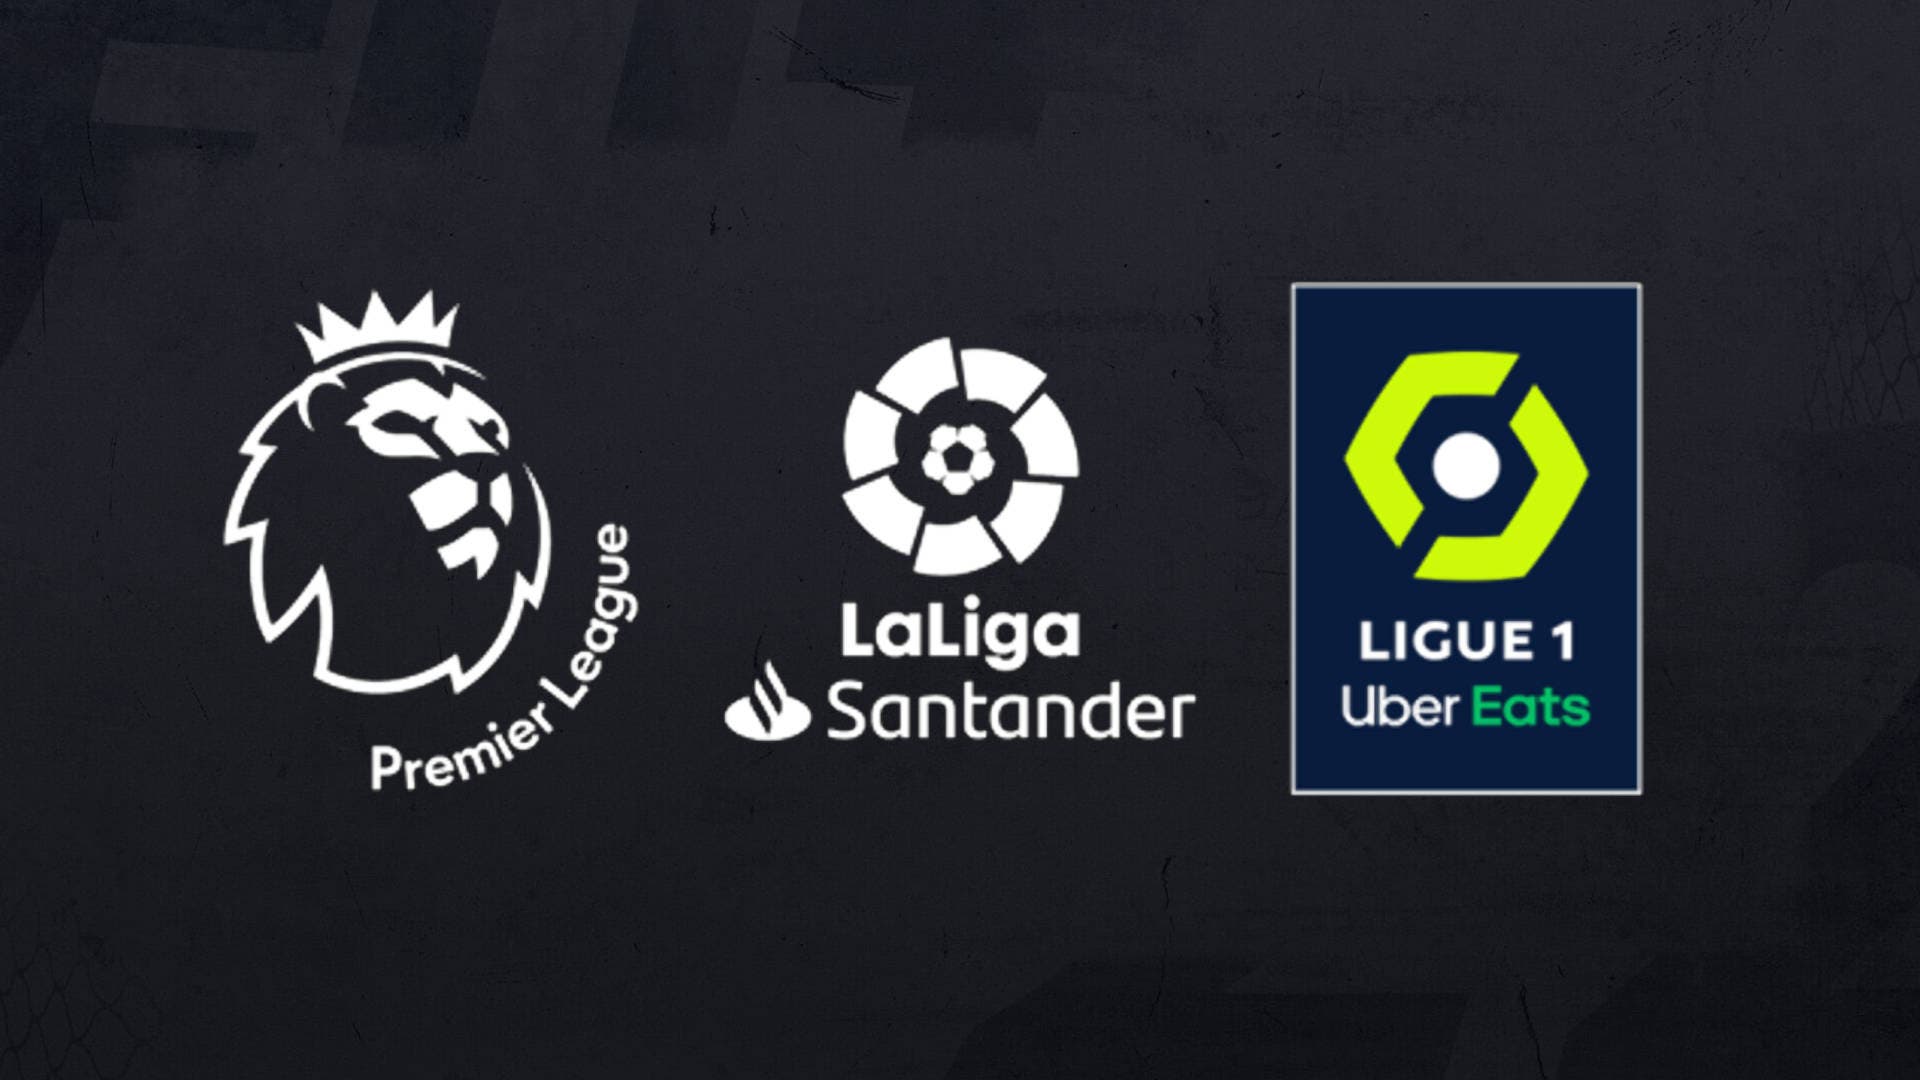 FIFA 23: Many Fantasy FUT players leaked (including a LaLiga Santander SBC) and a POTM